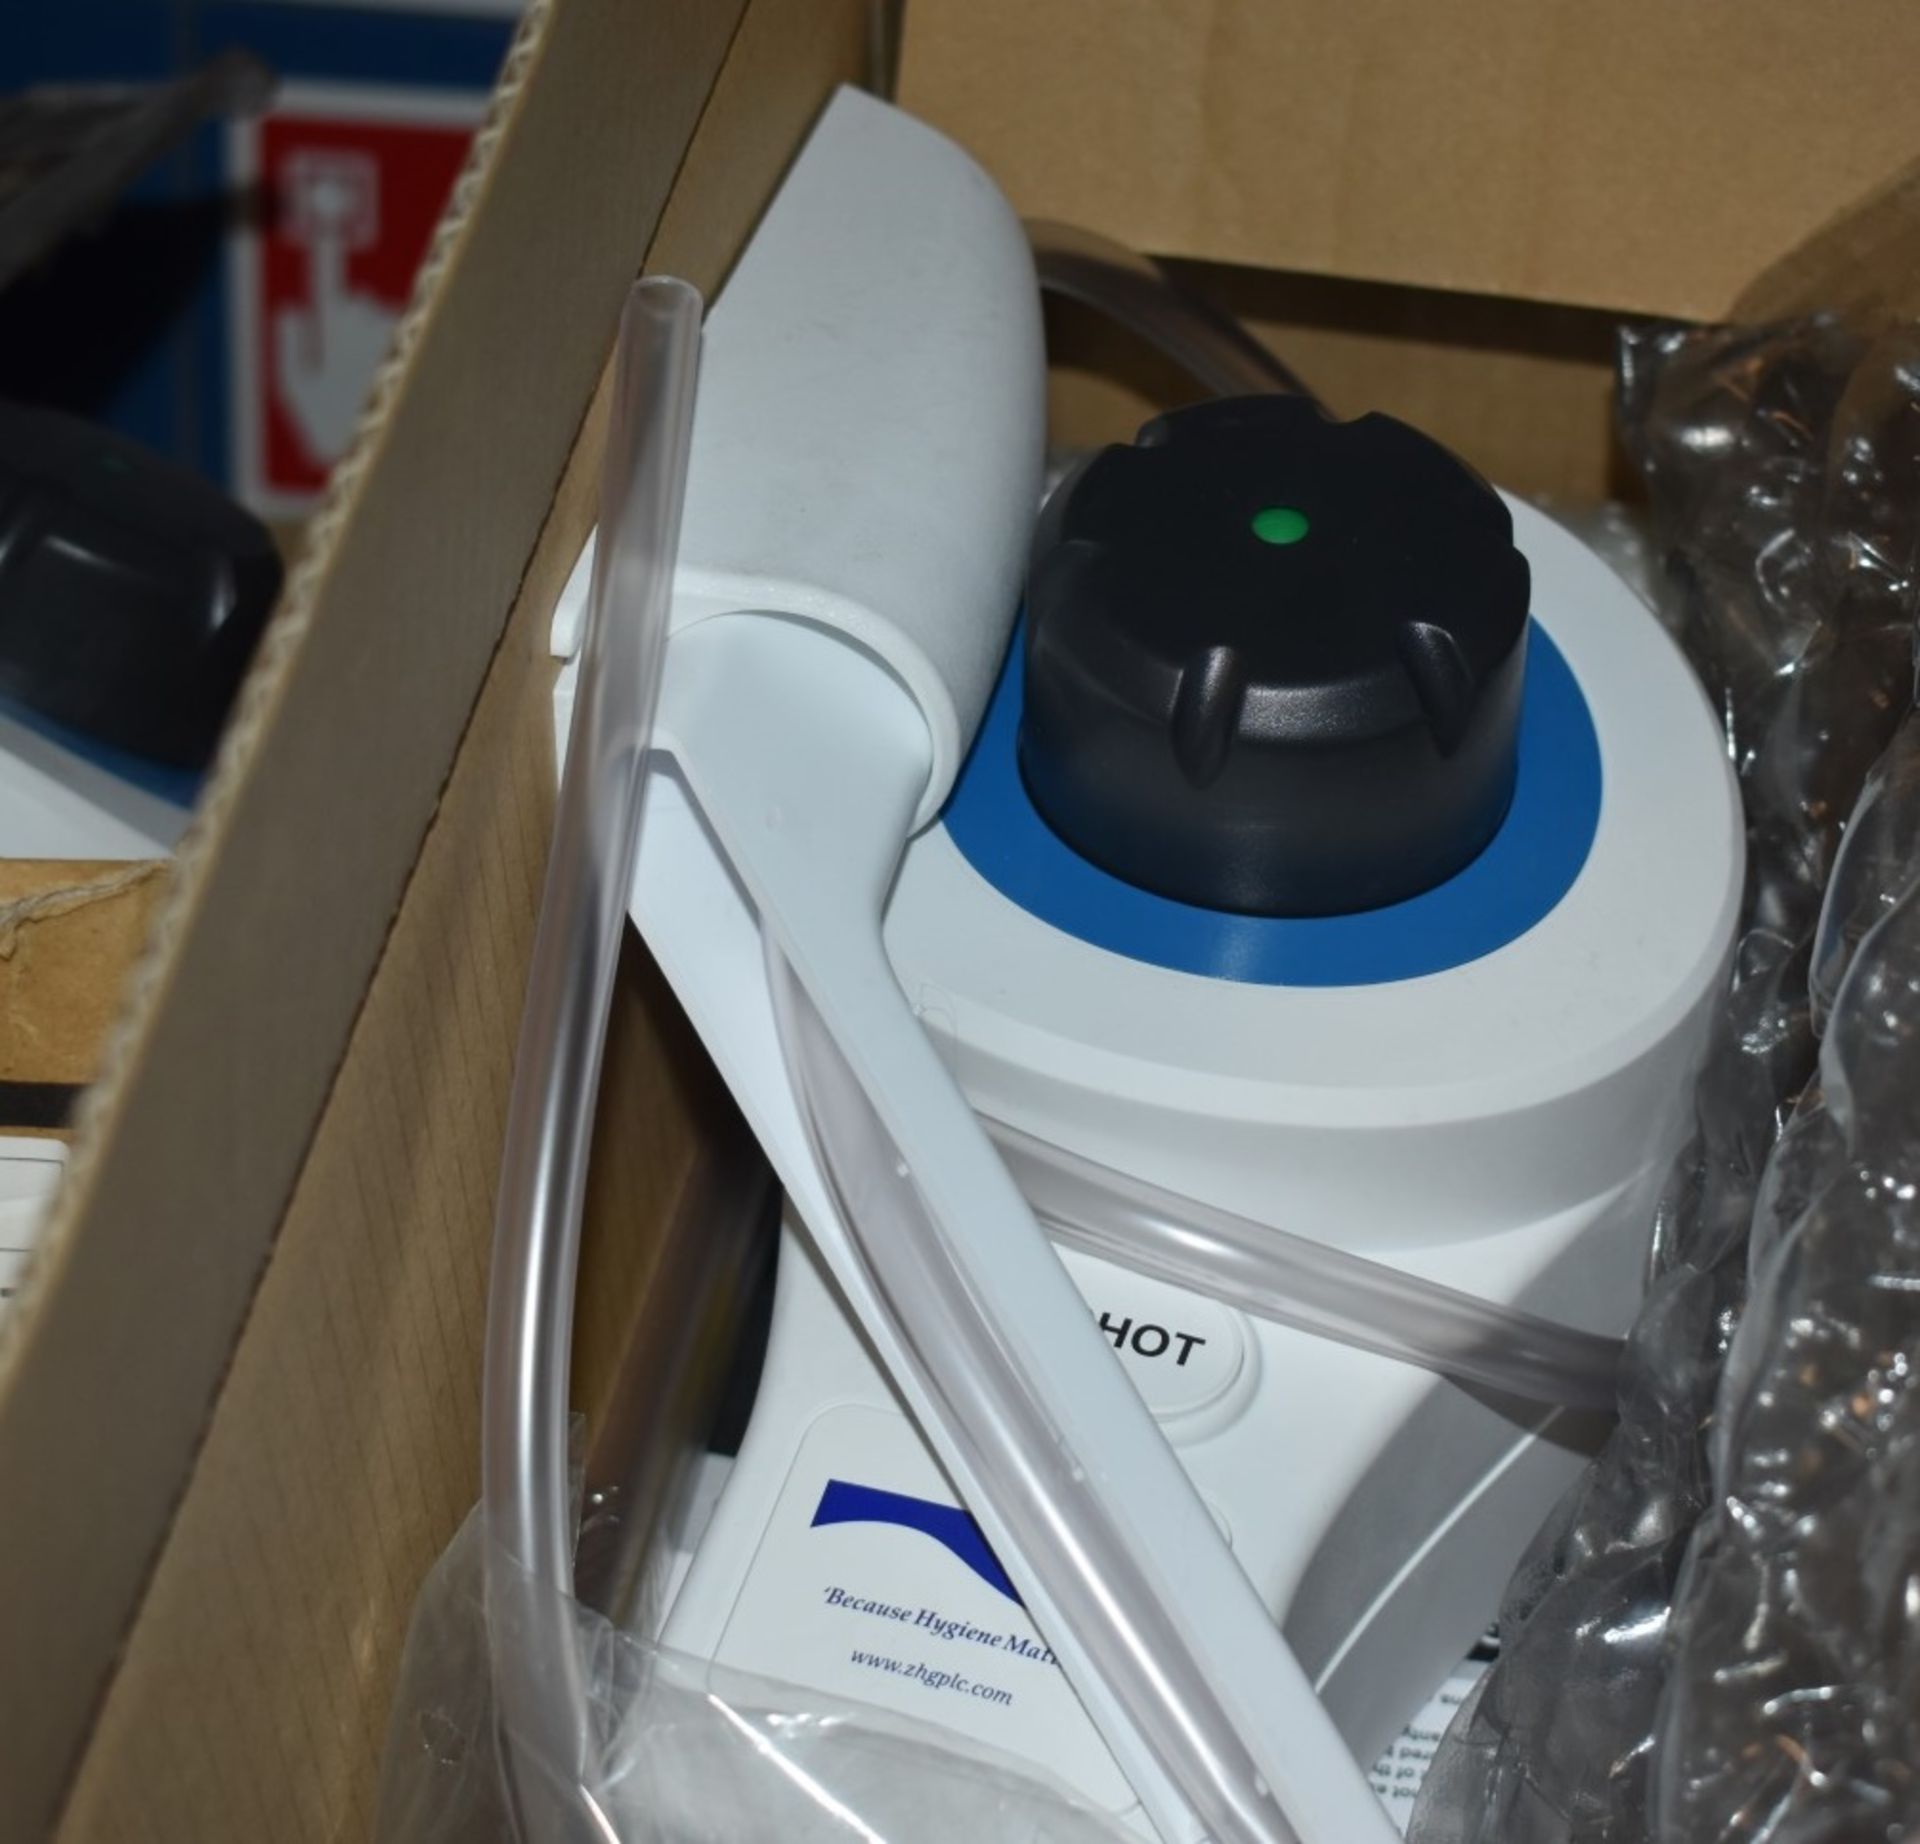 2 x Zenith Ecoshot Premium Bucket Dispensers - White.Blue None Twin - Unused With Original Boxes - - Image 2 of 2